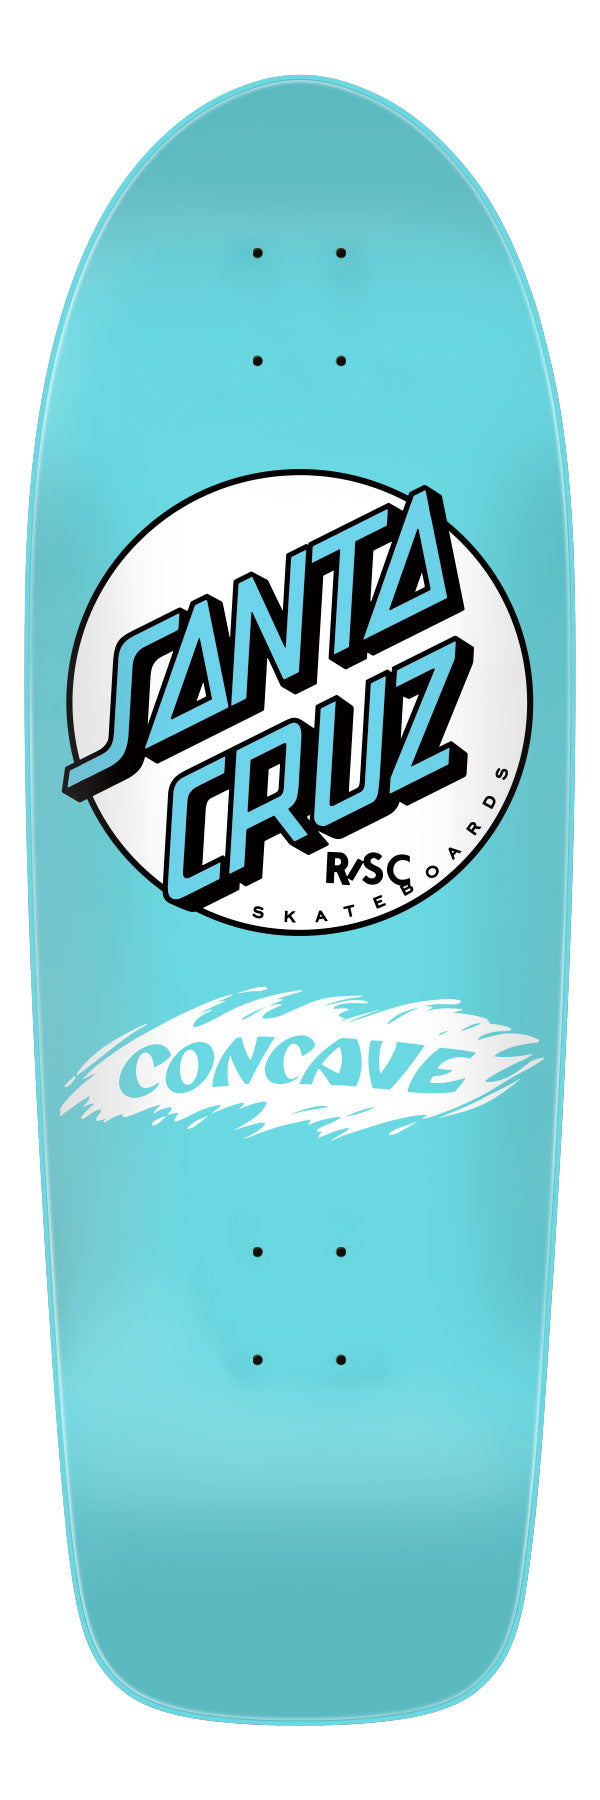 Santa Cruz RSC Concave Reissue Deck 72/800